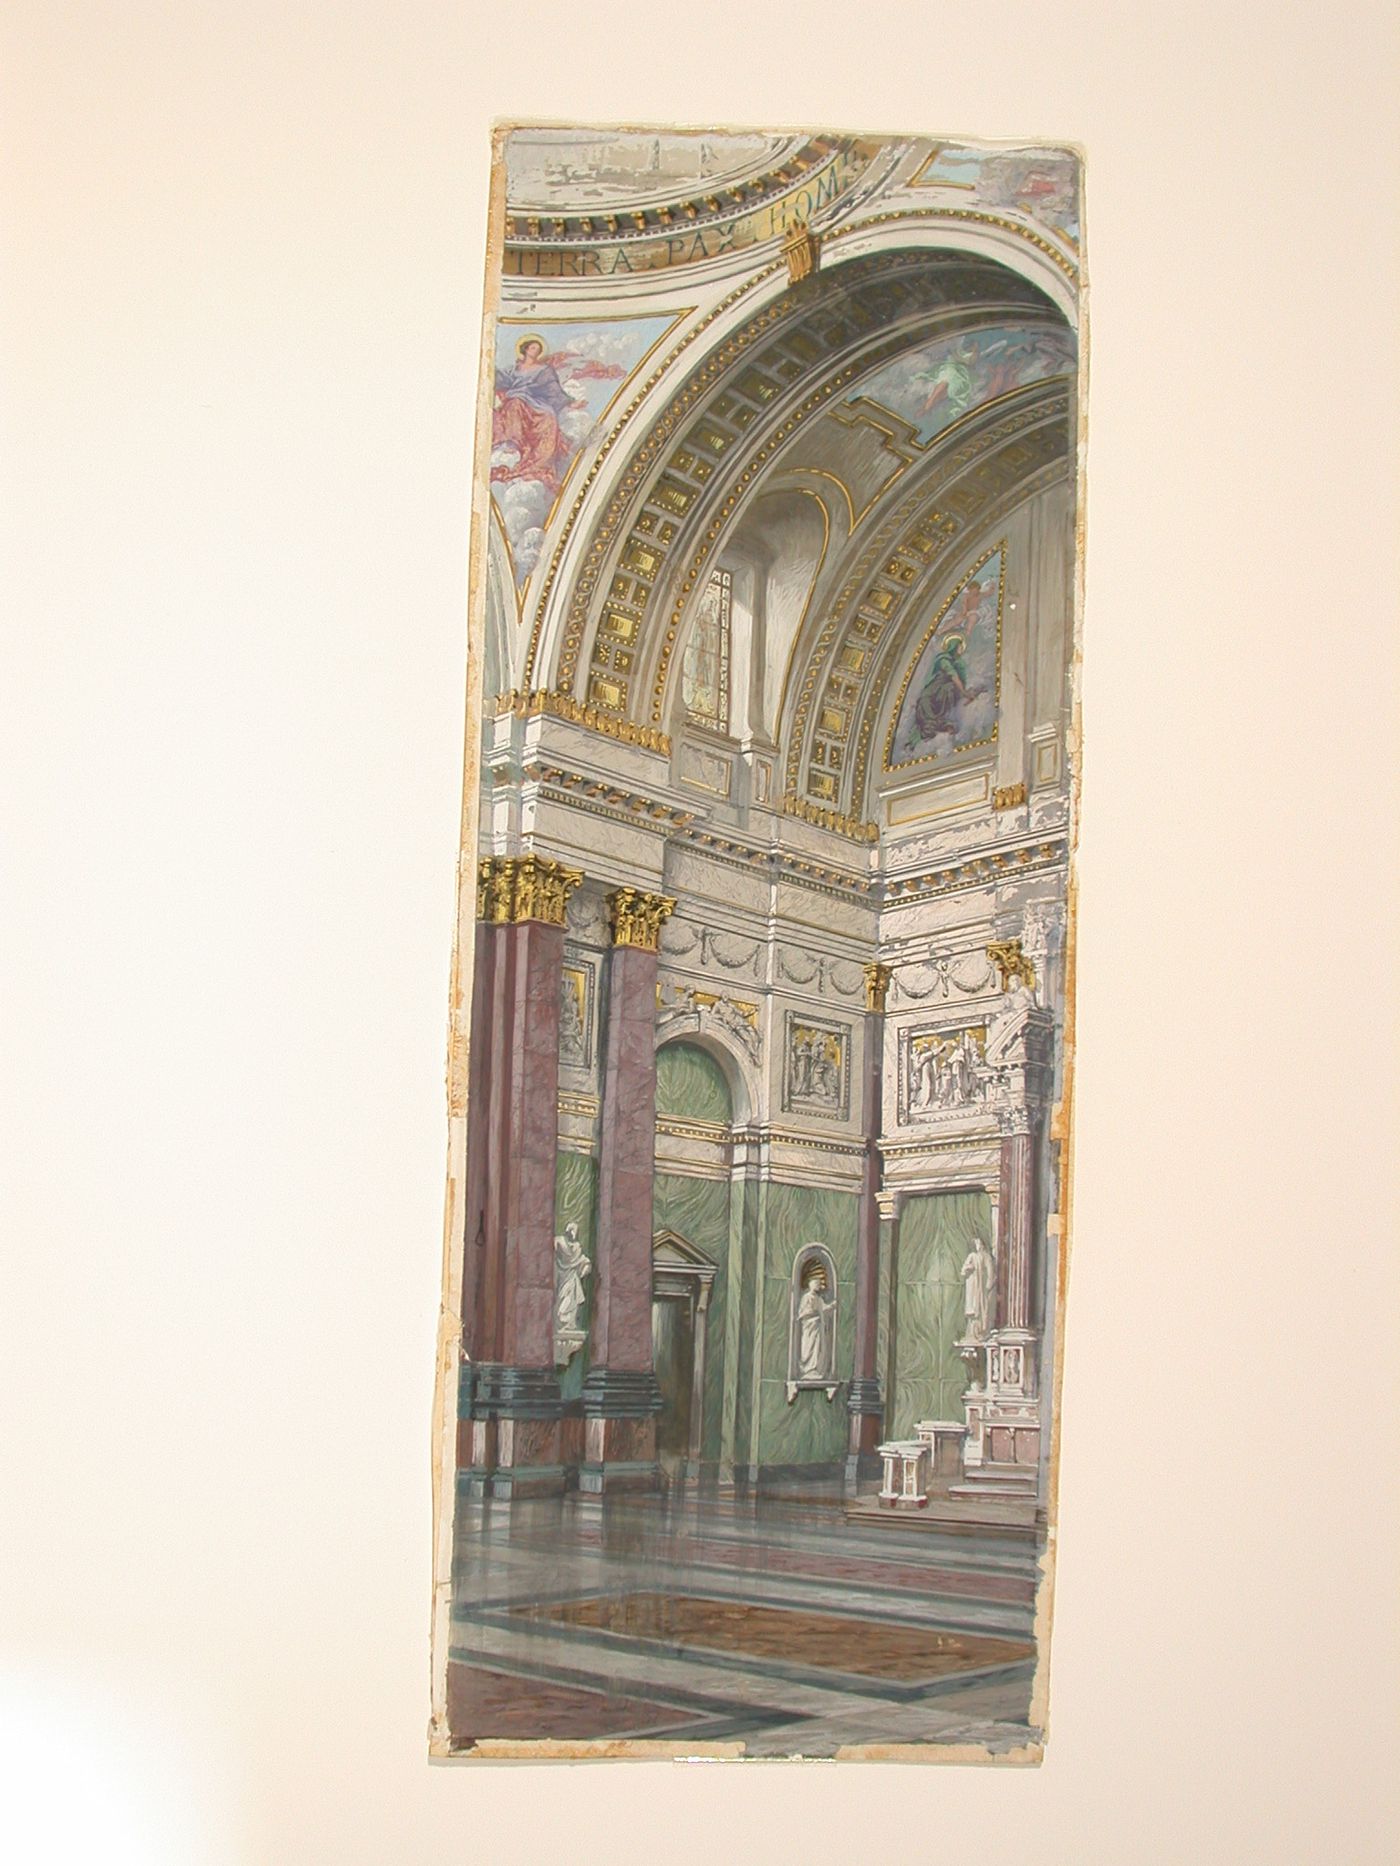 Interior of a Baroque Church - perspective